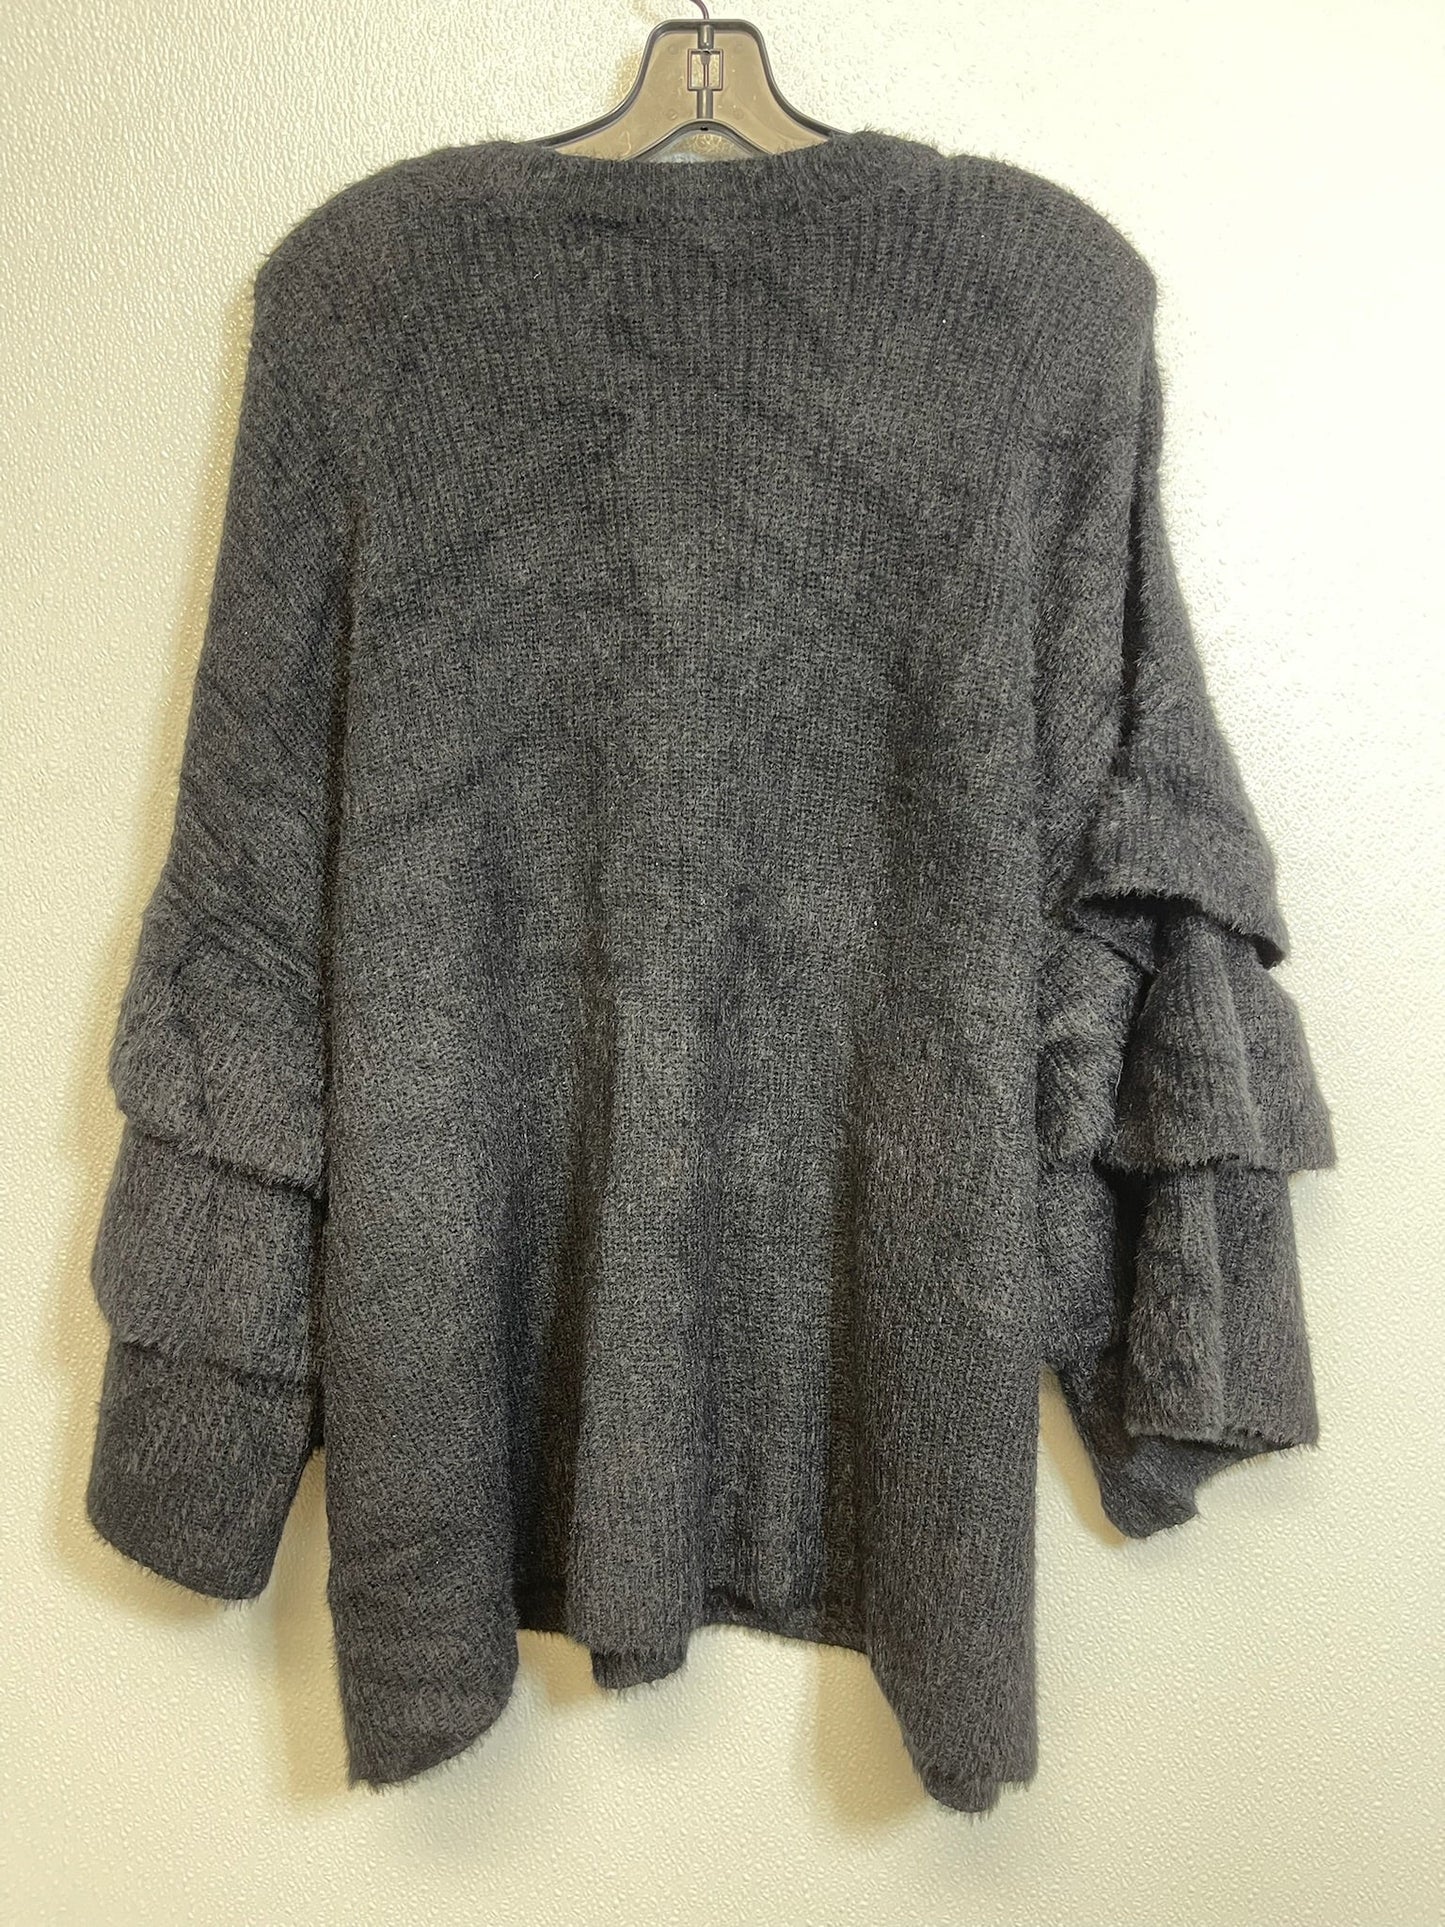 Black Sweater Lane Bryant O, Size 3x